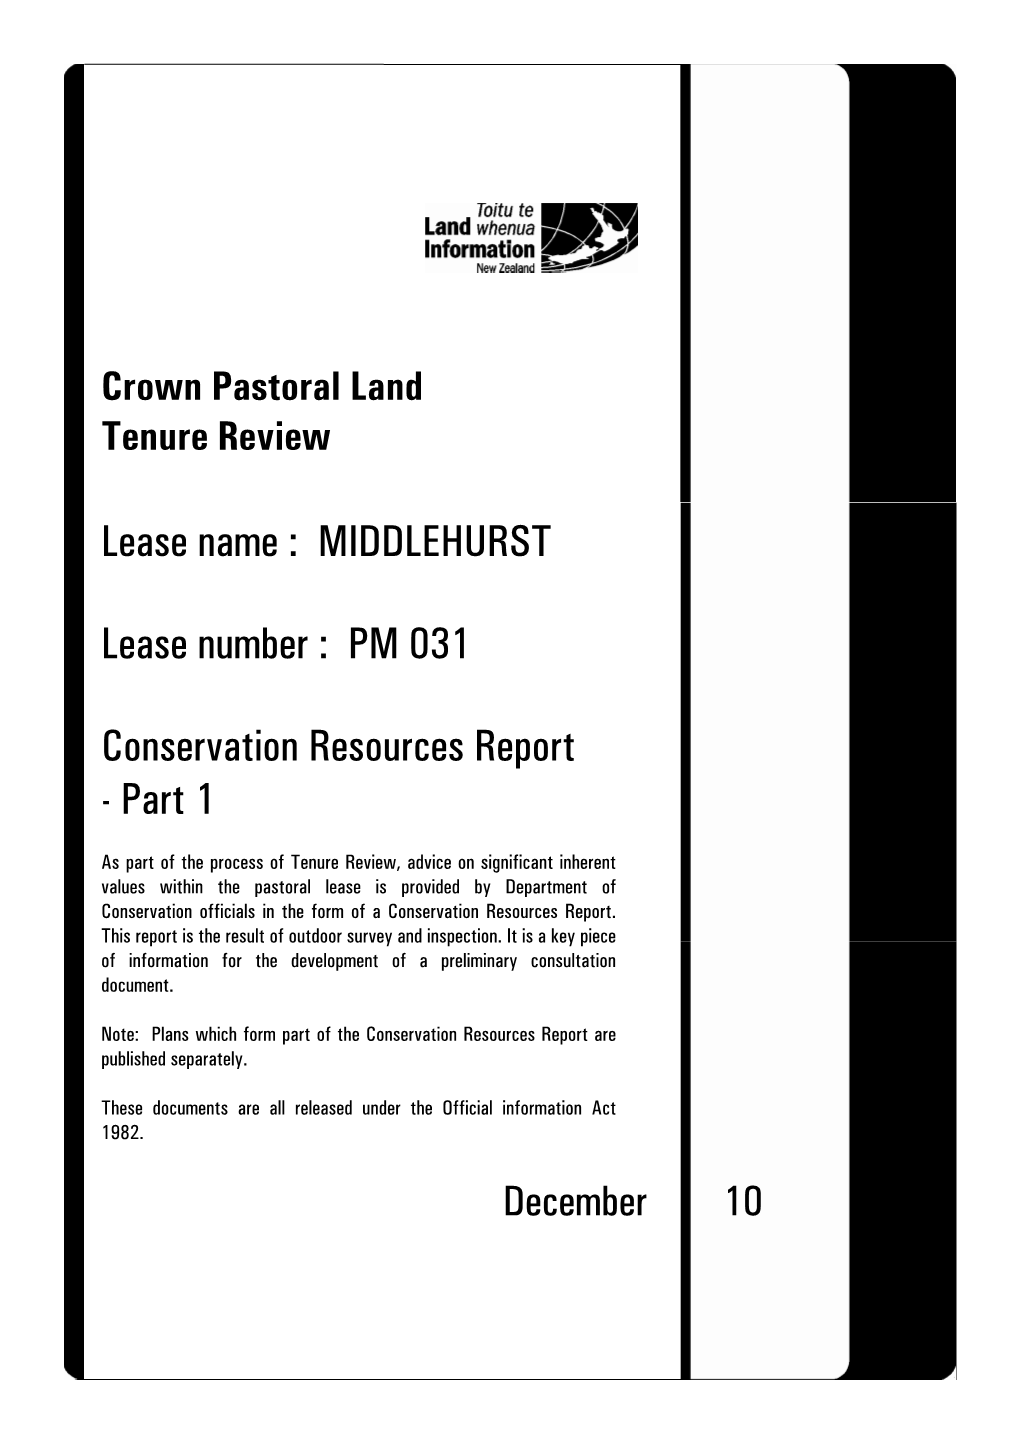 Crown Pastoral-Tenure Review-Middlehurst-Conservation